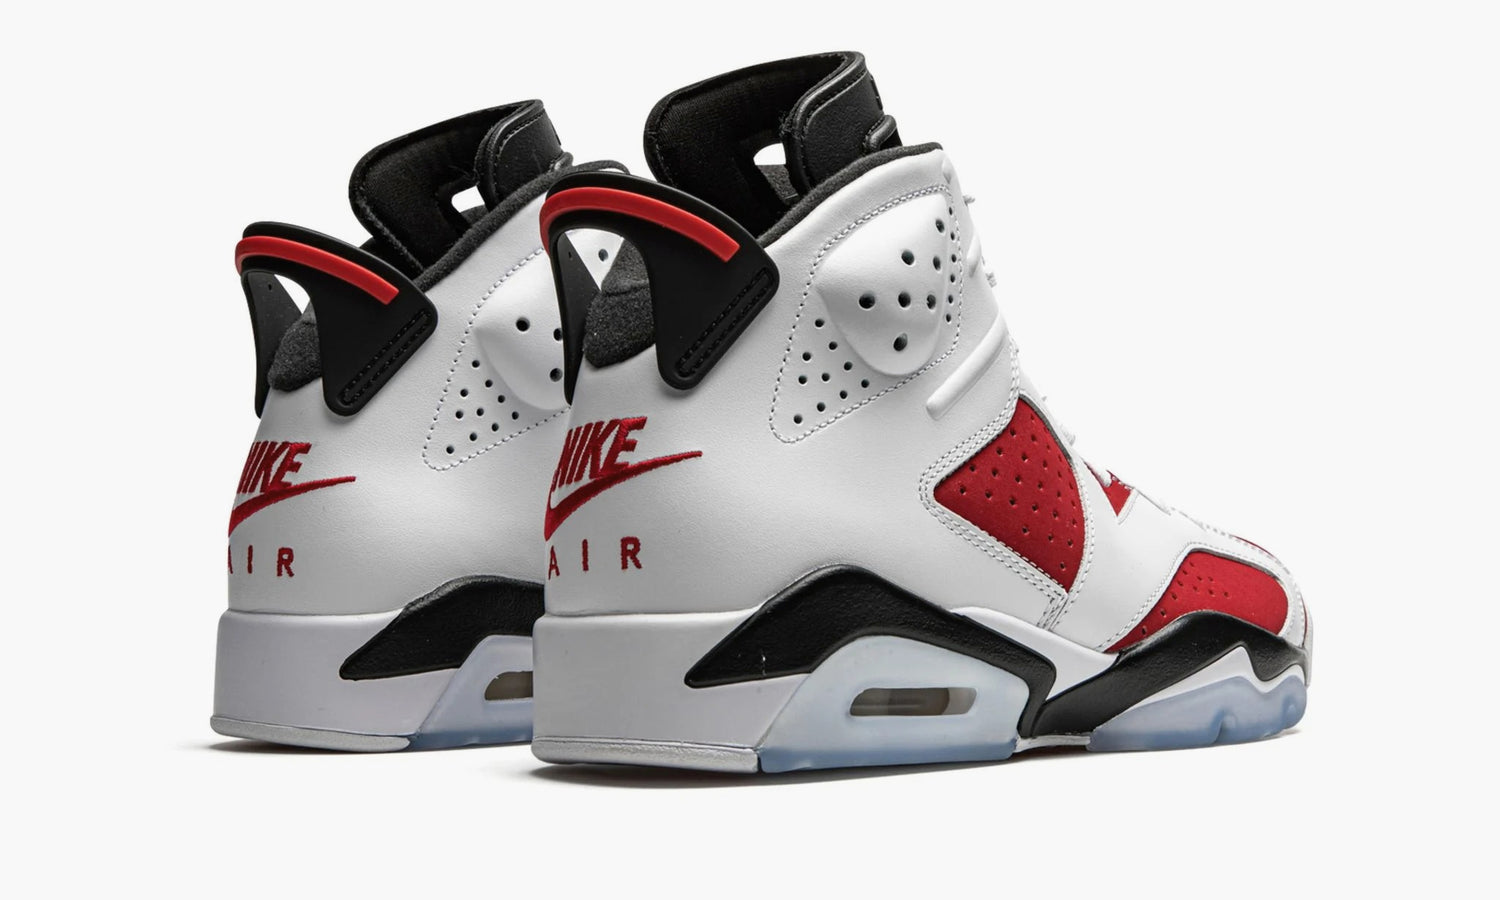 Nike Air Jordan 6 Retro "Carmine" - CT8529 106 | Grailshop